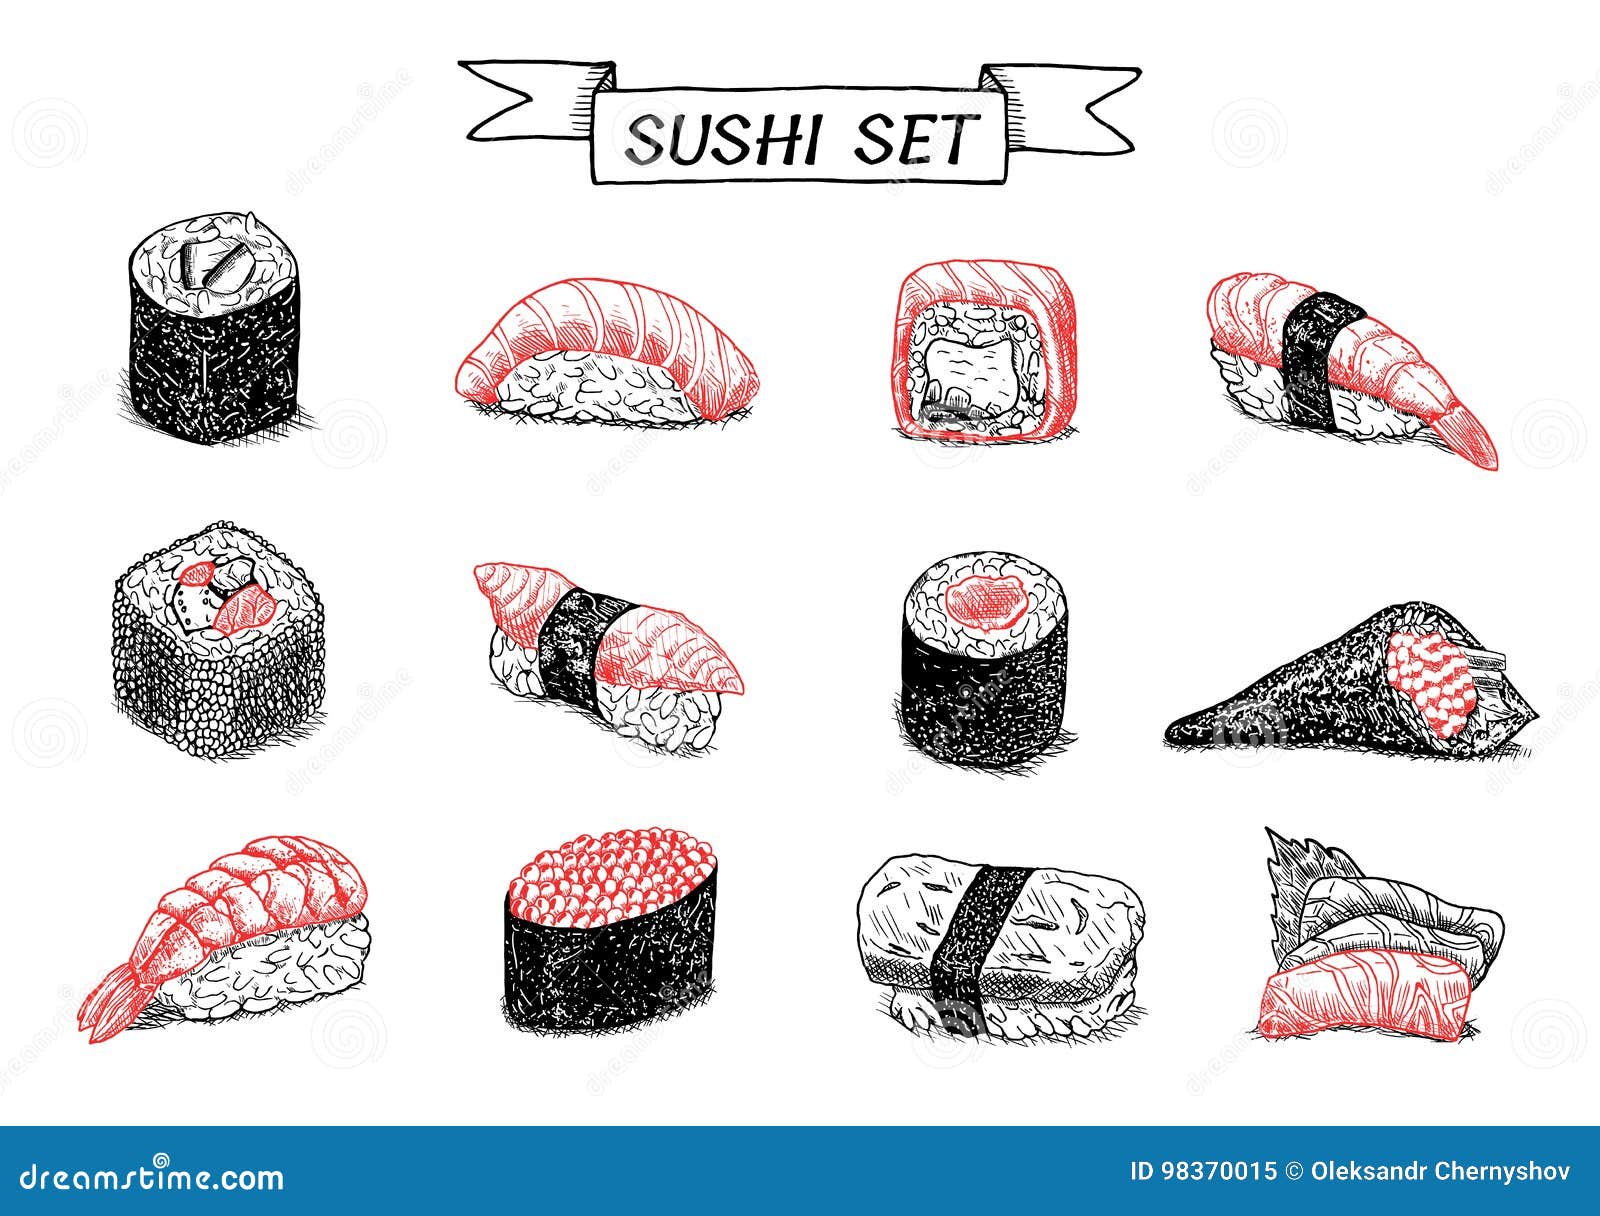 Sushi and Rolls Hand Drawn Color Illustration. Stock Illustration ...